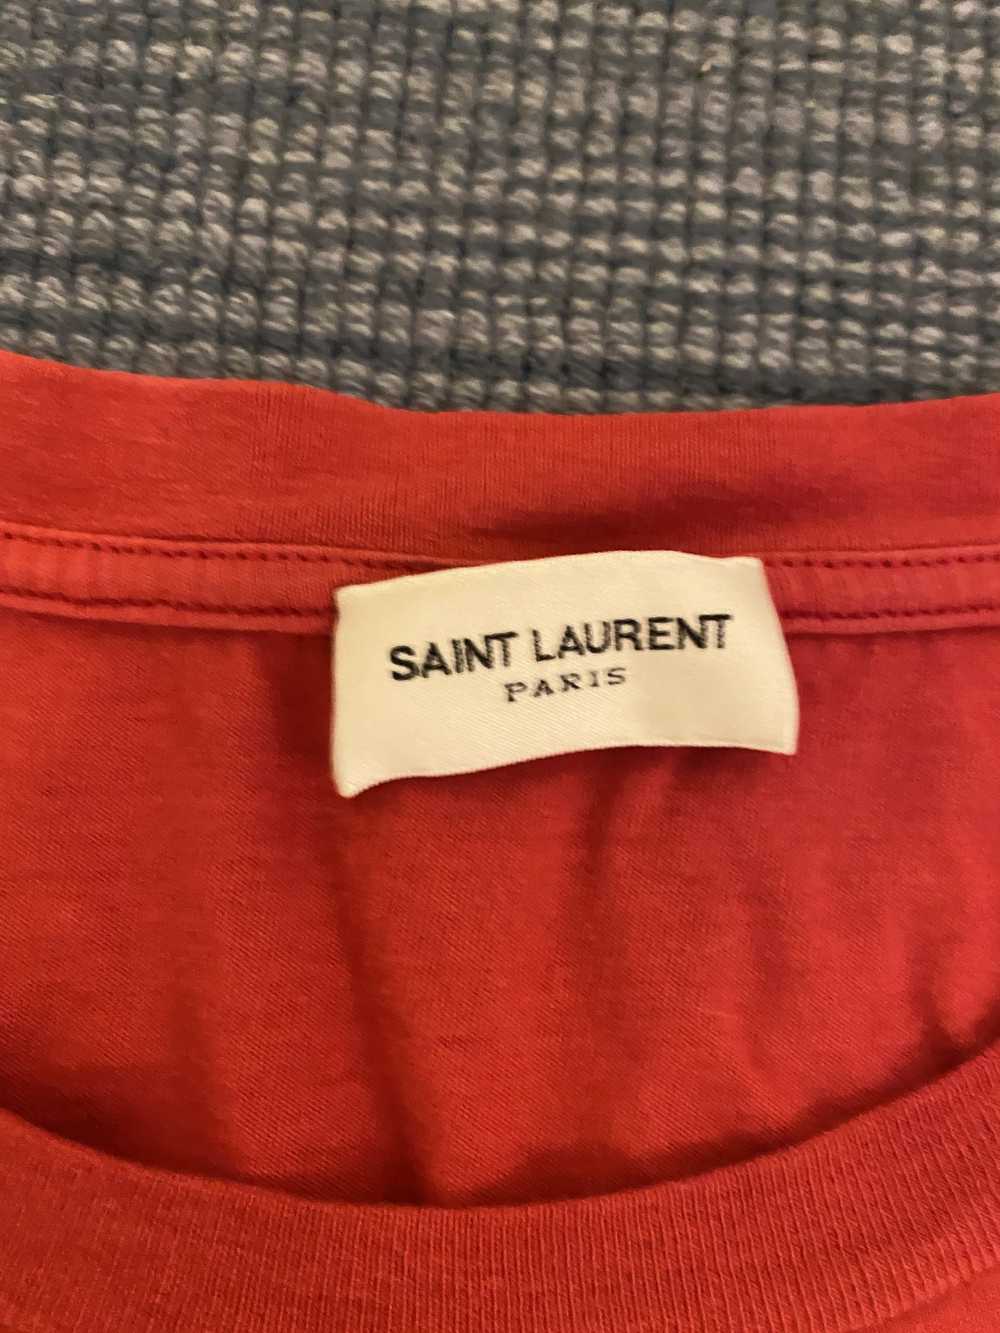 Saint Laurent Paris × Yves Saint Laurent Music Tee - image 2